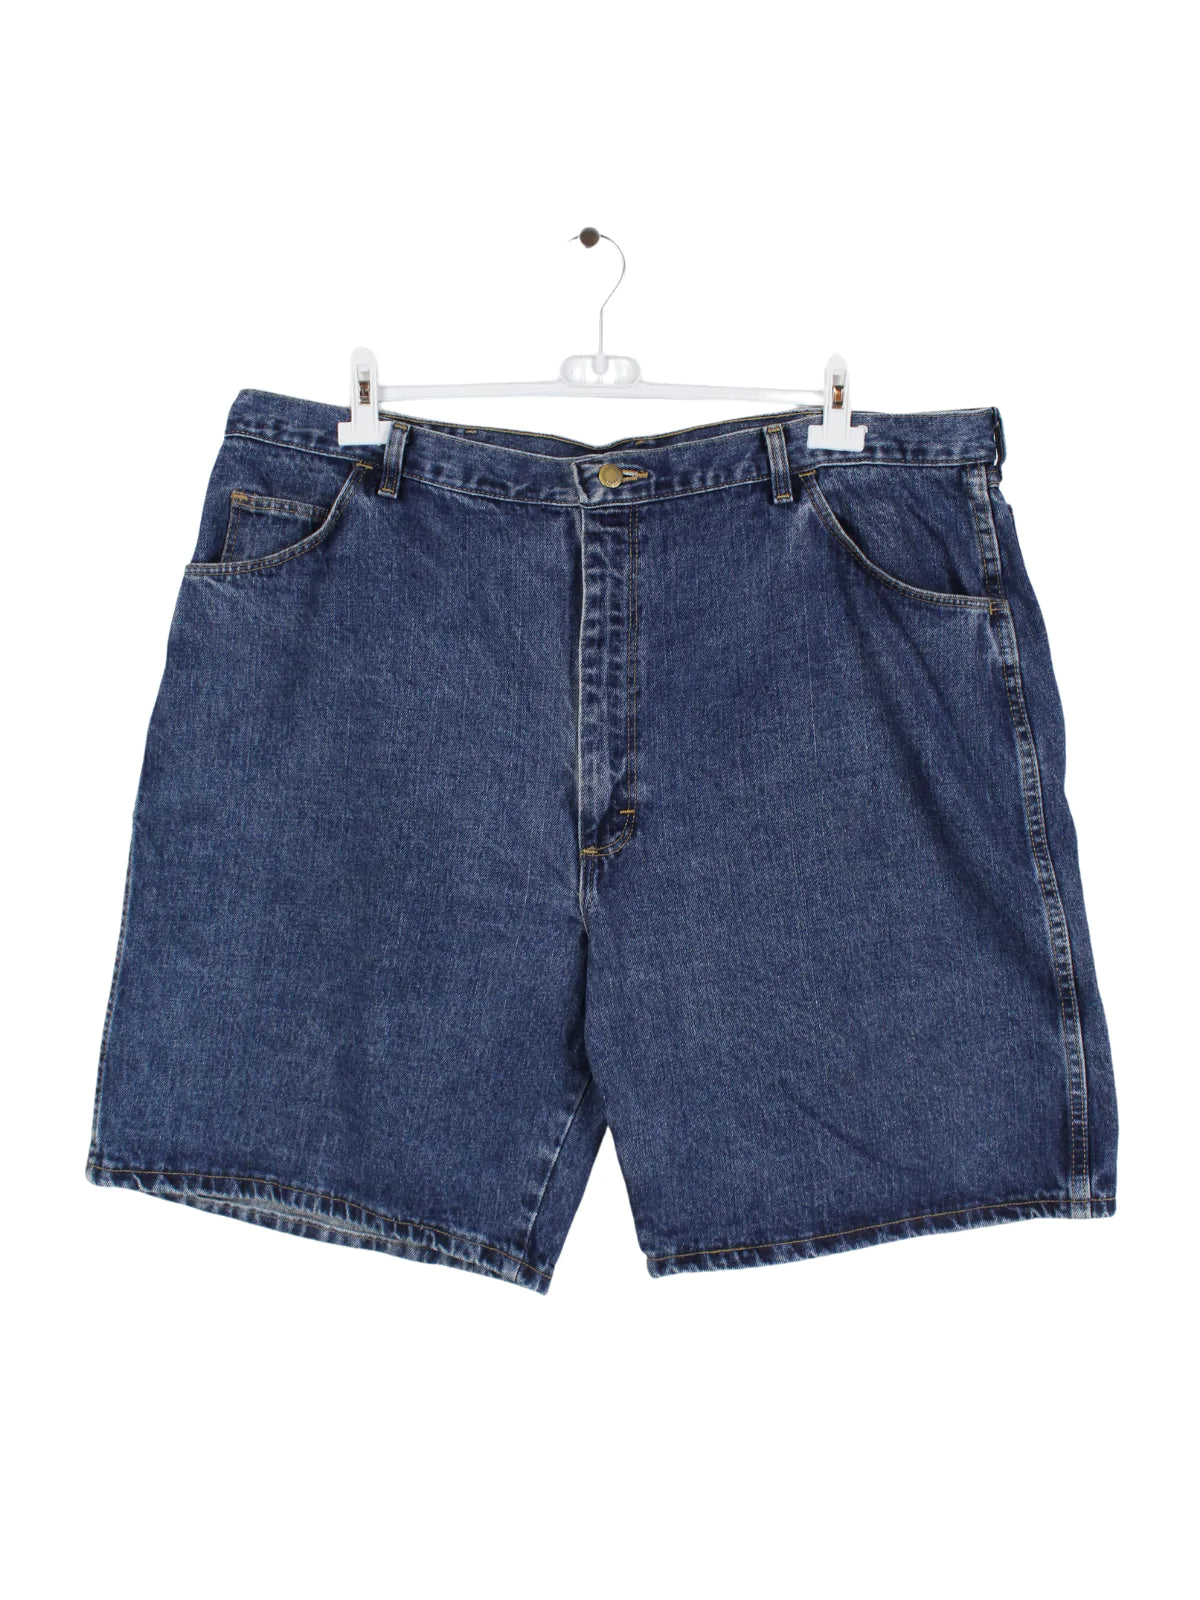 Wrangler Jeans Shorts / Jorts Blau W42